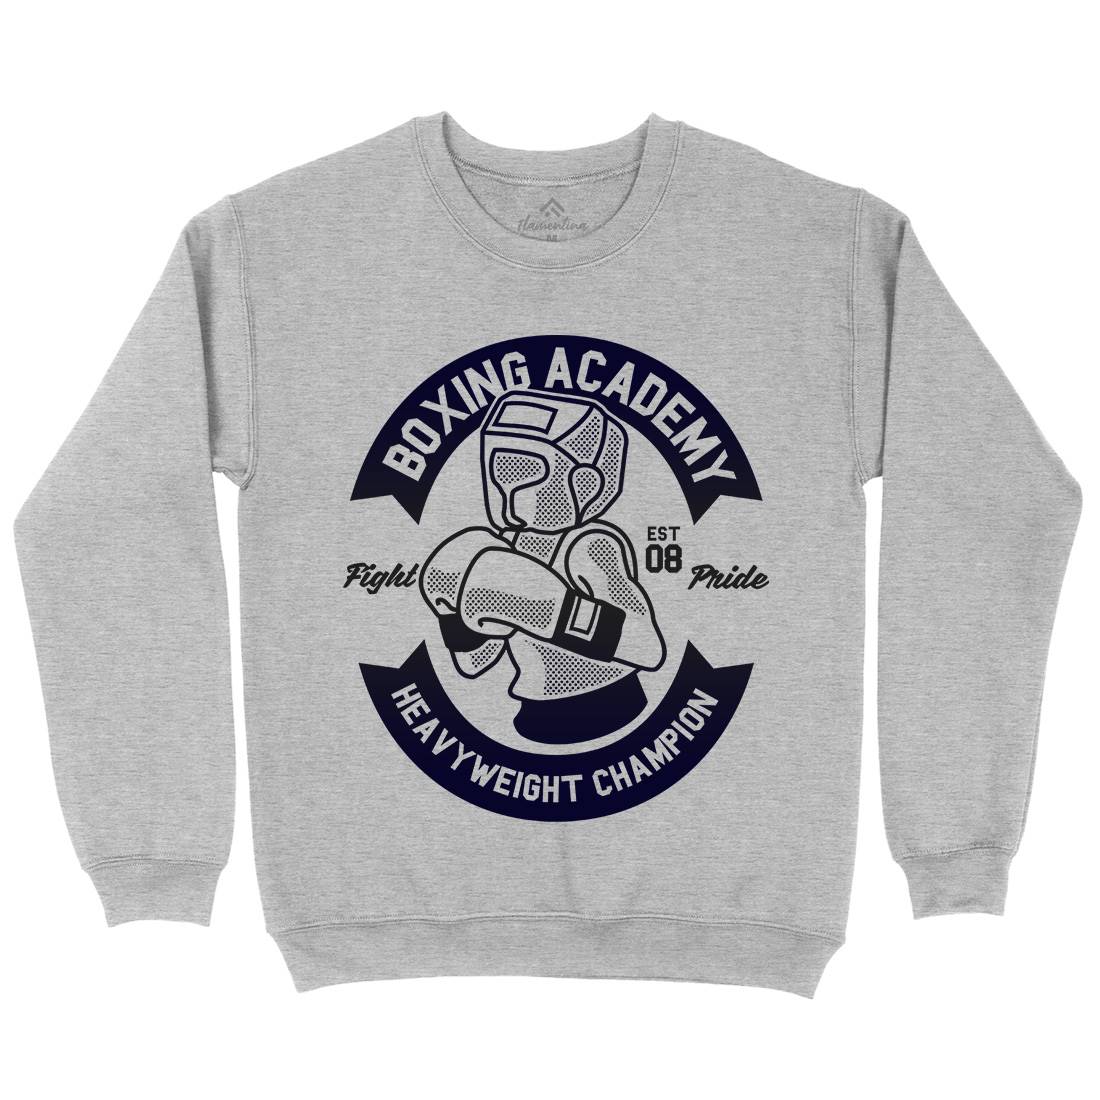 Boxing Academy Kids Crew Neck Sweatshirt Gym A213